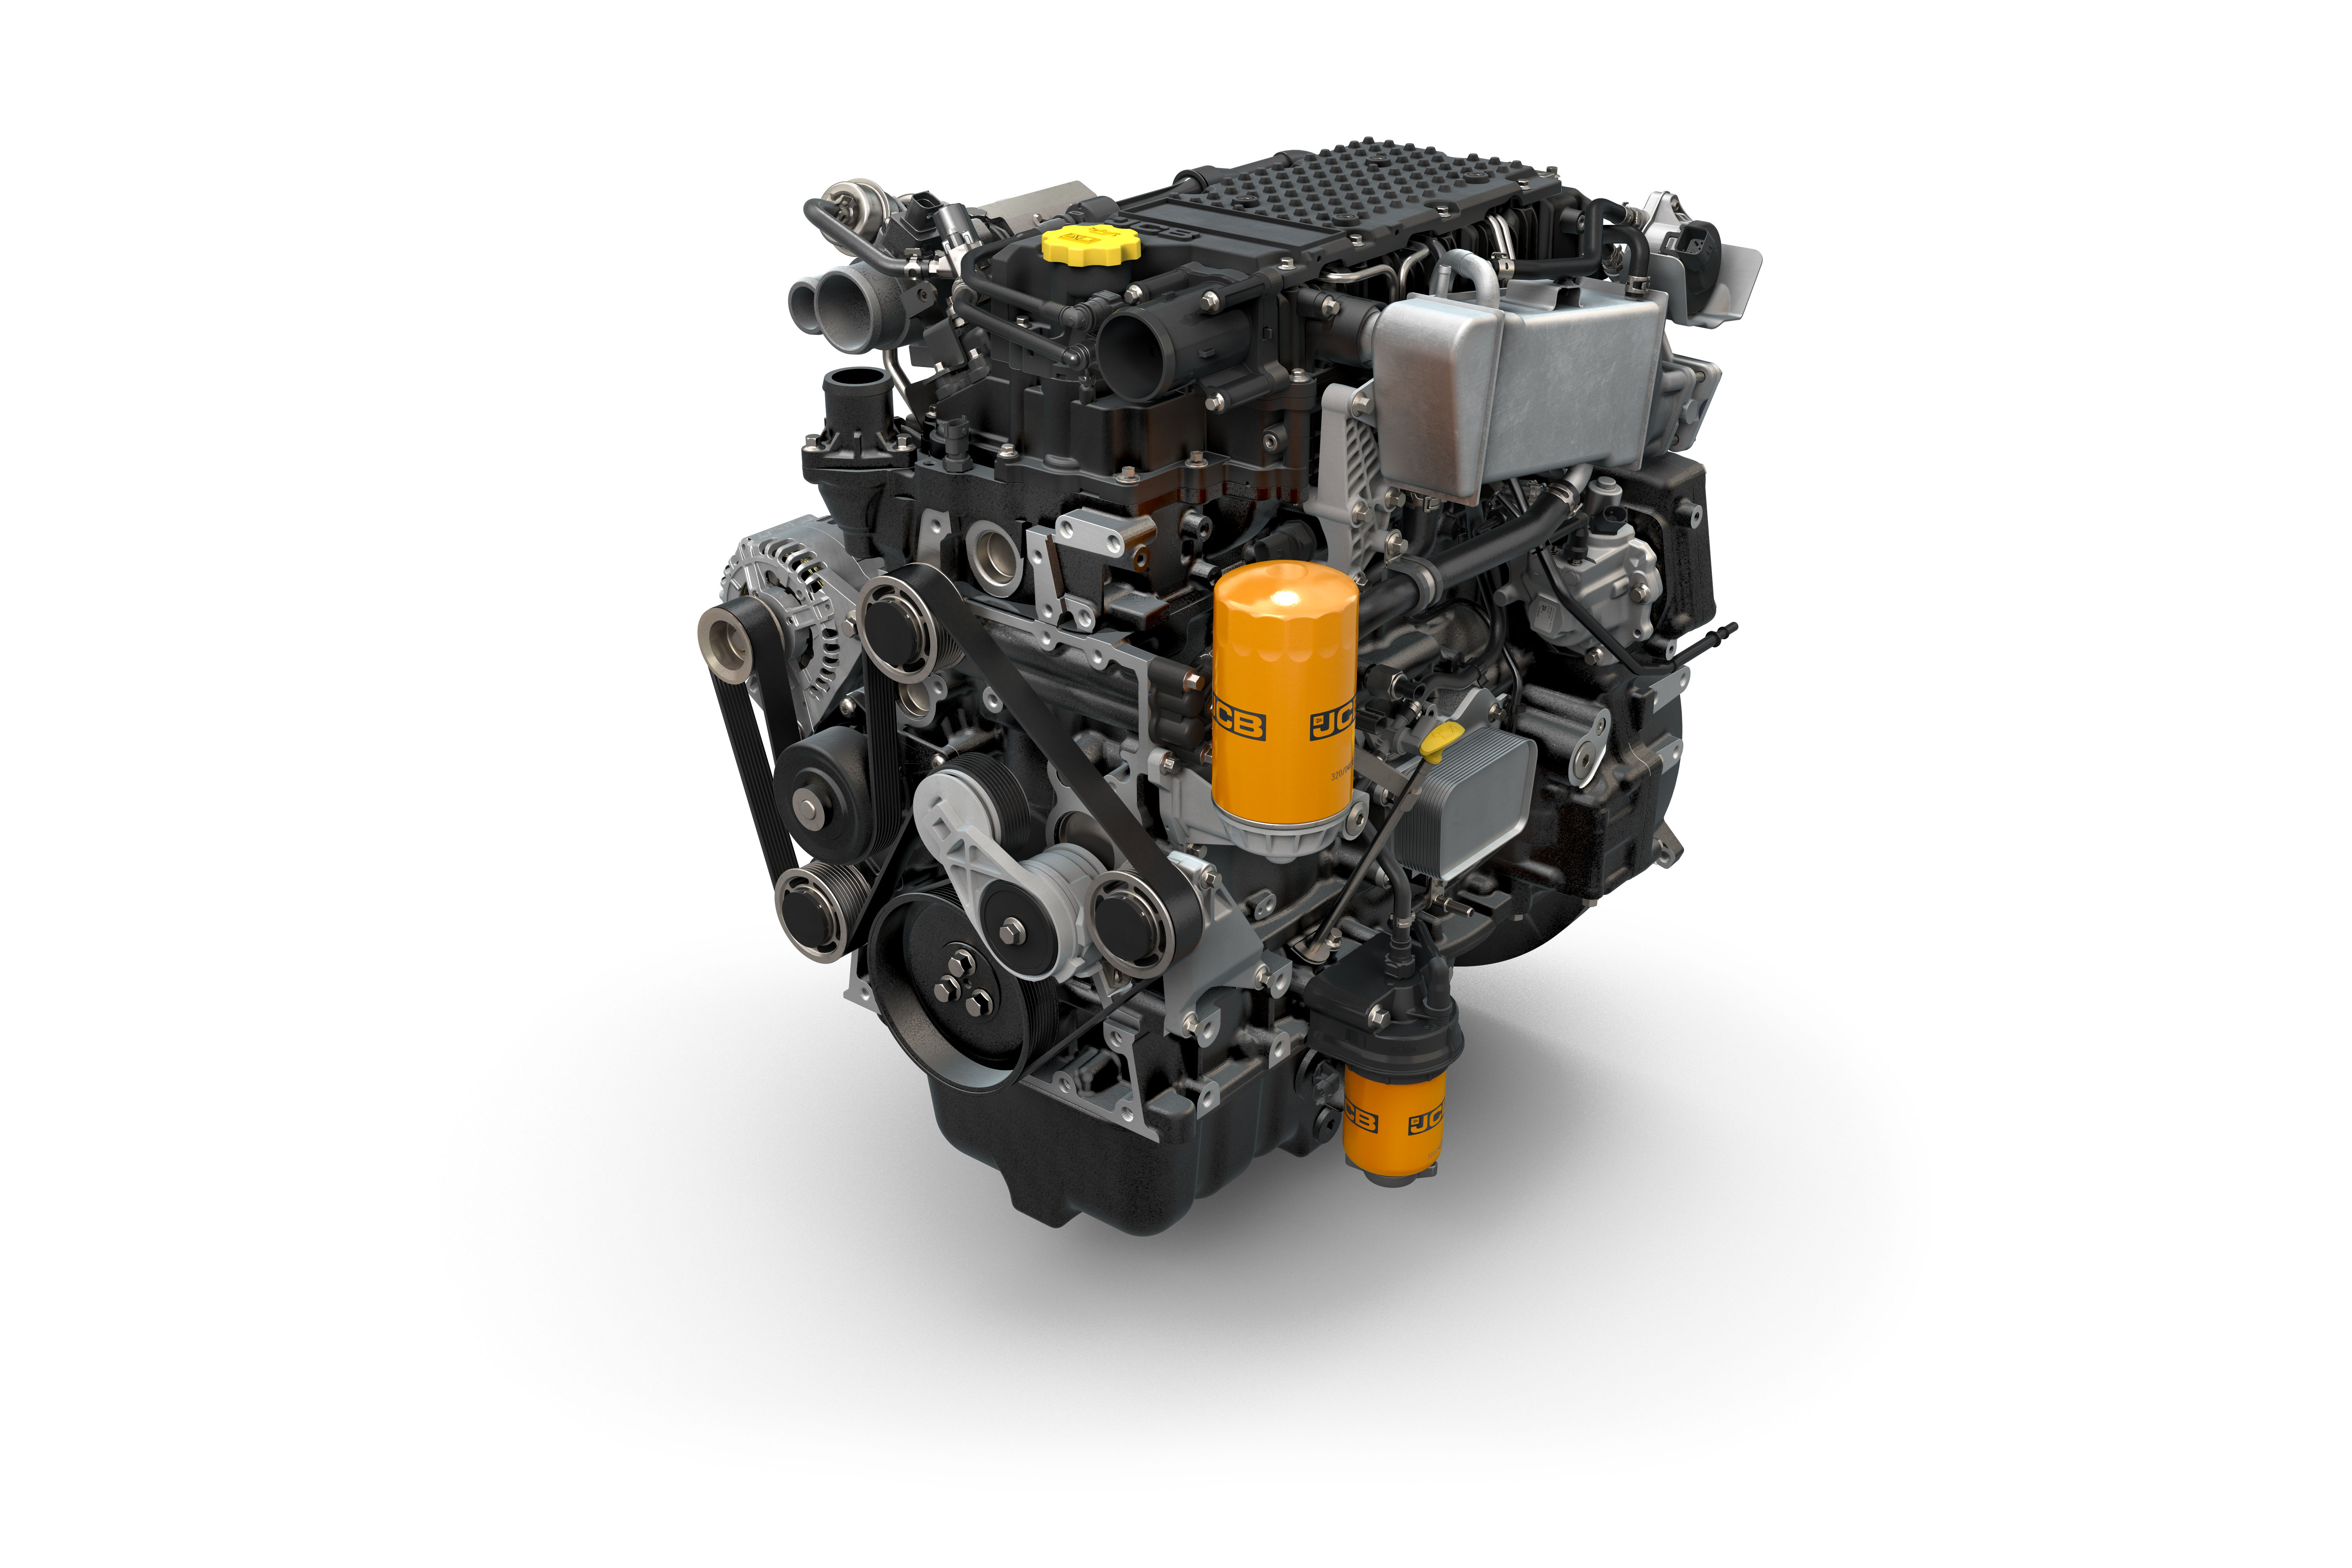 JCB430 DieselMax engine